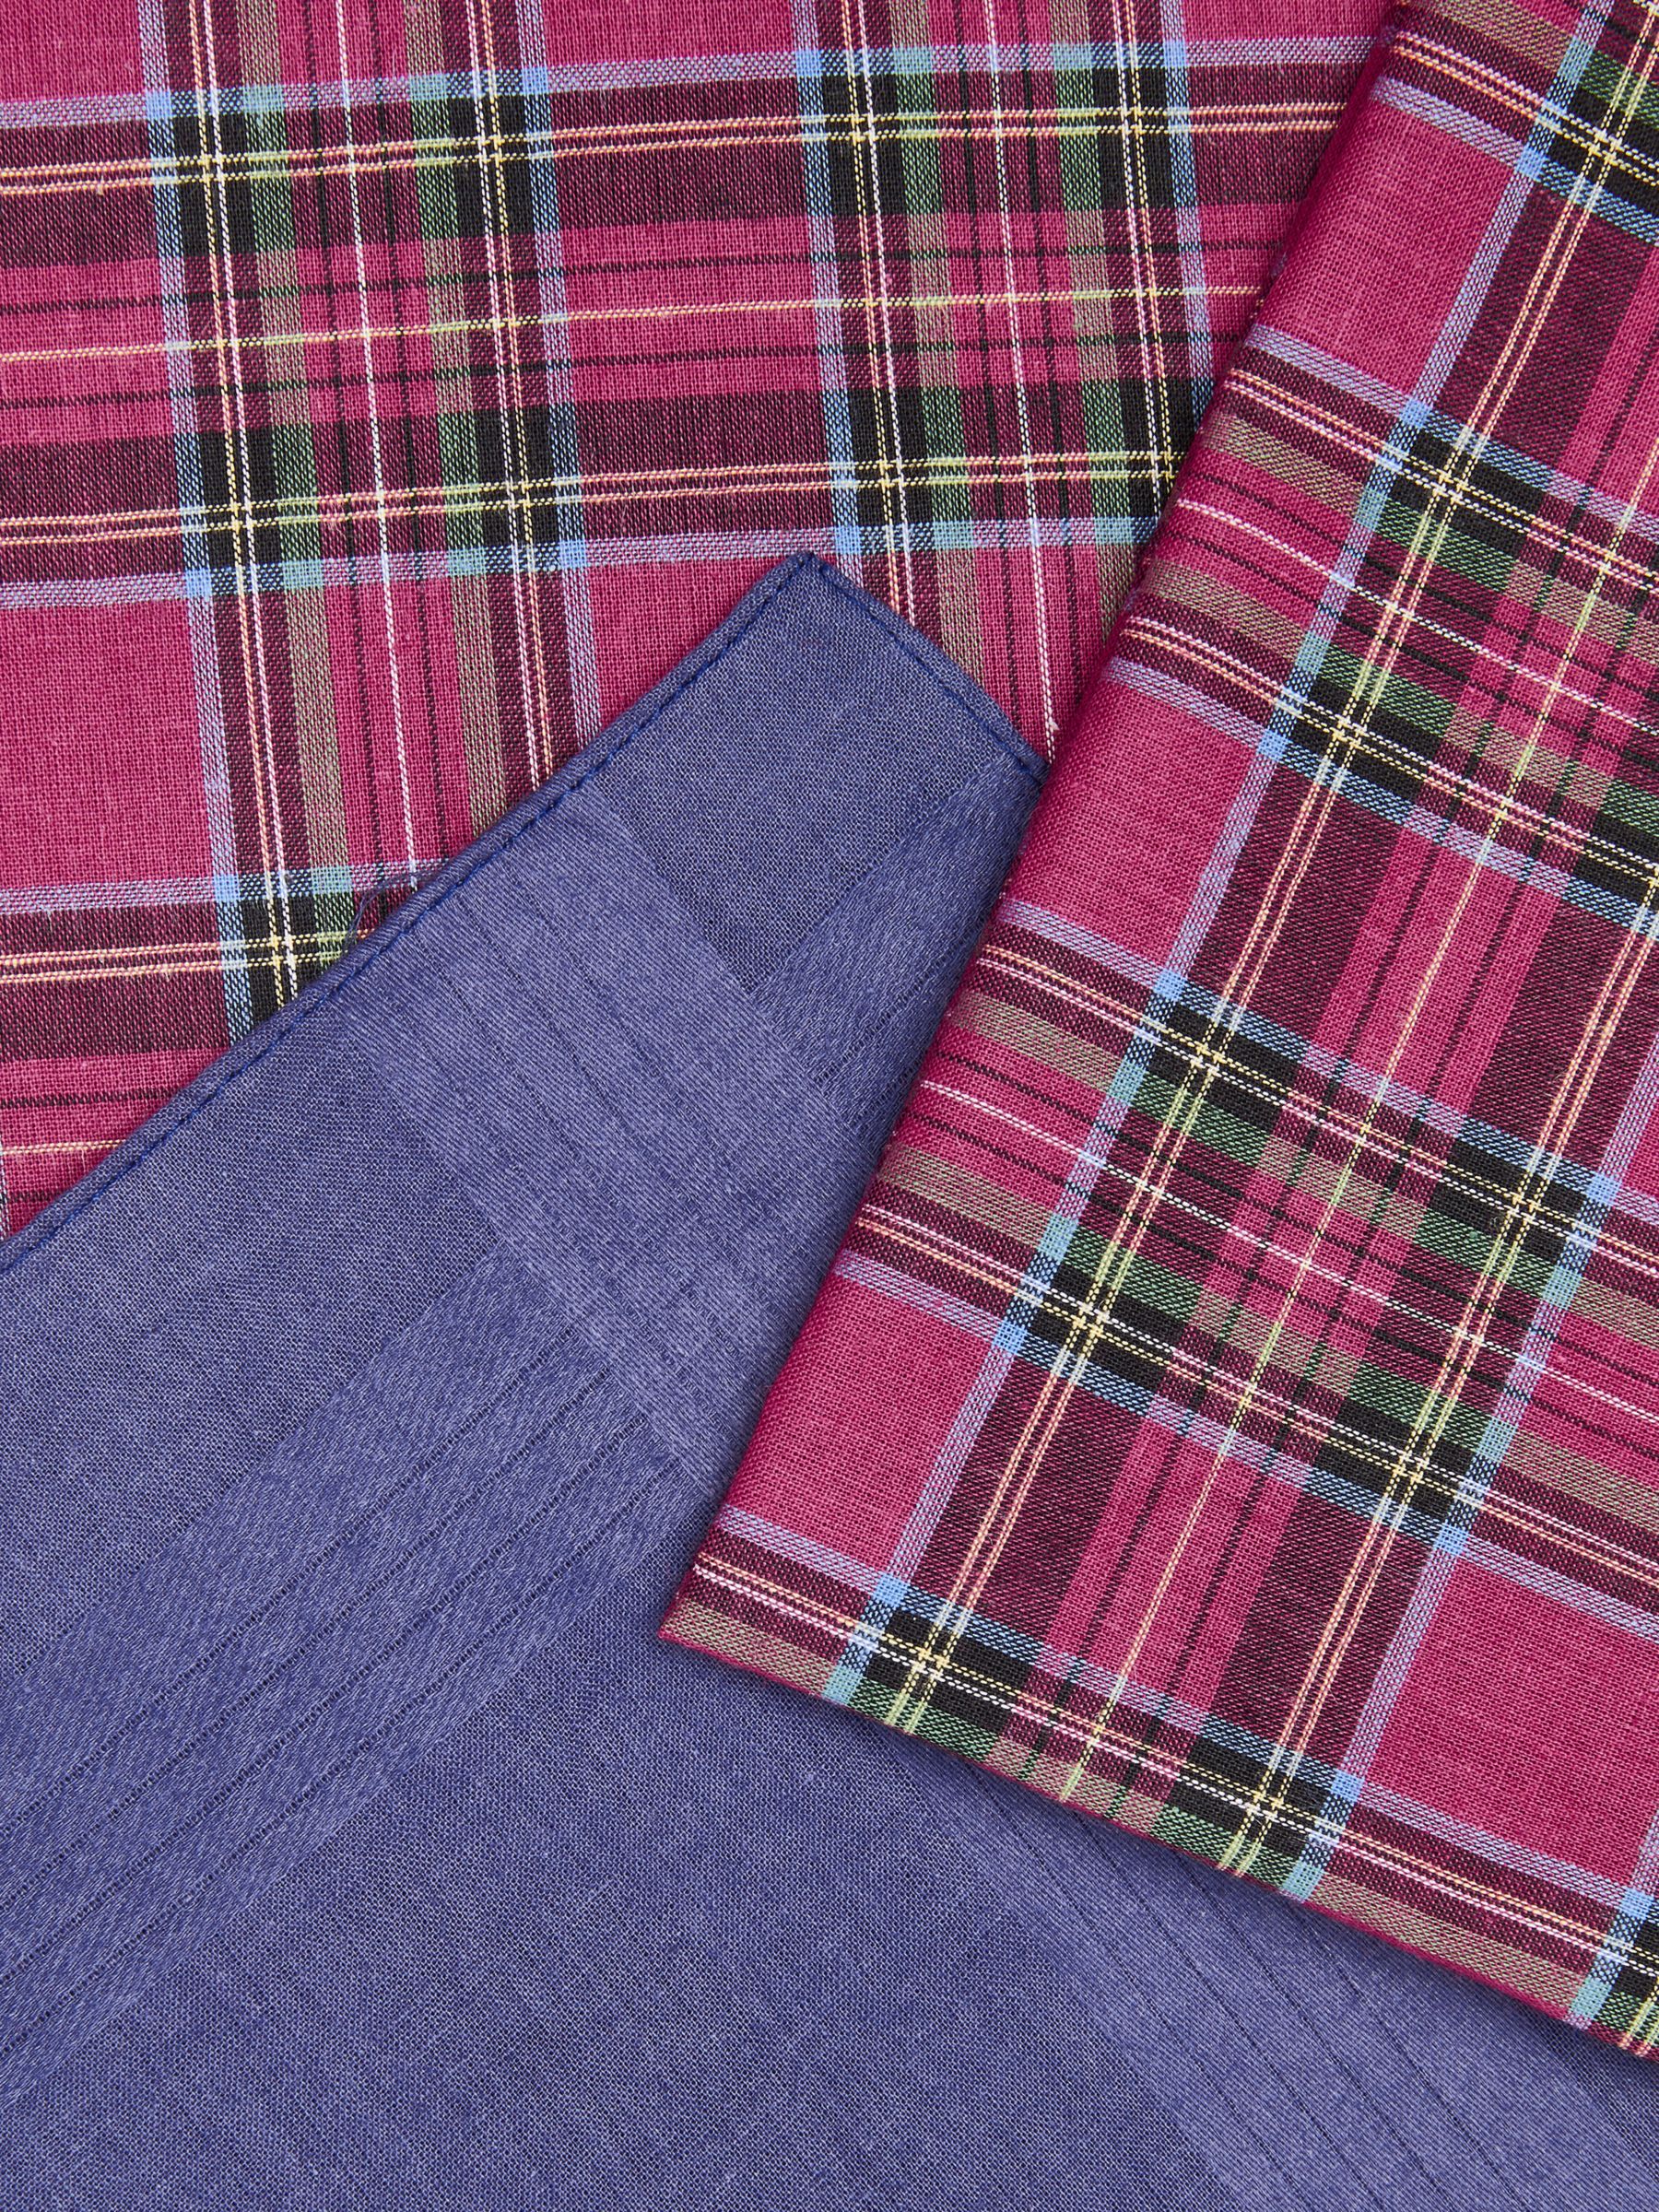 John Lewis Tartan Cotton Handkerchiefs, Pack of 3, Blue/Purple